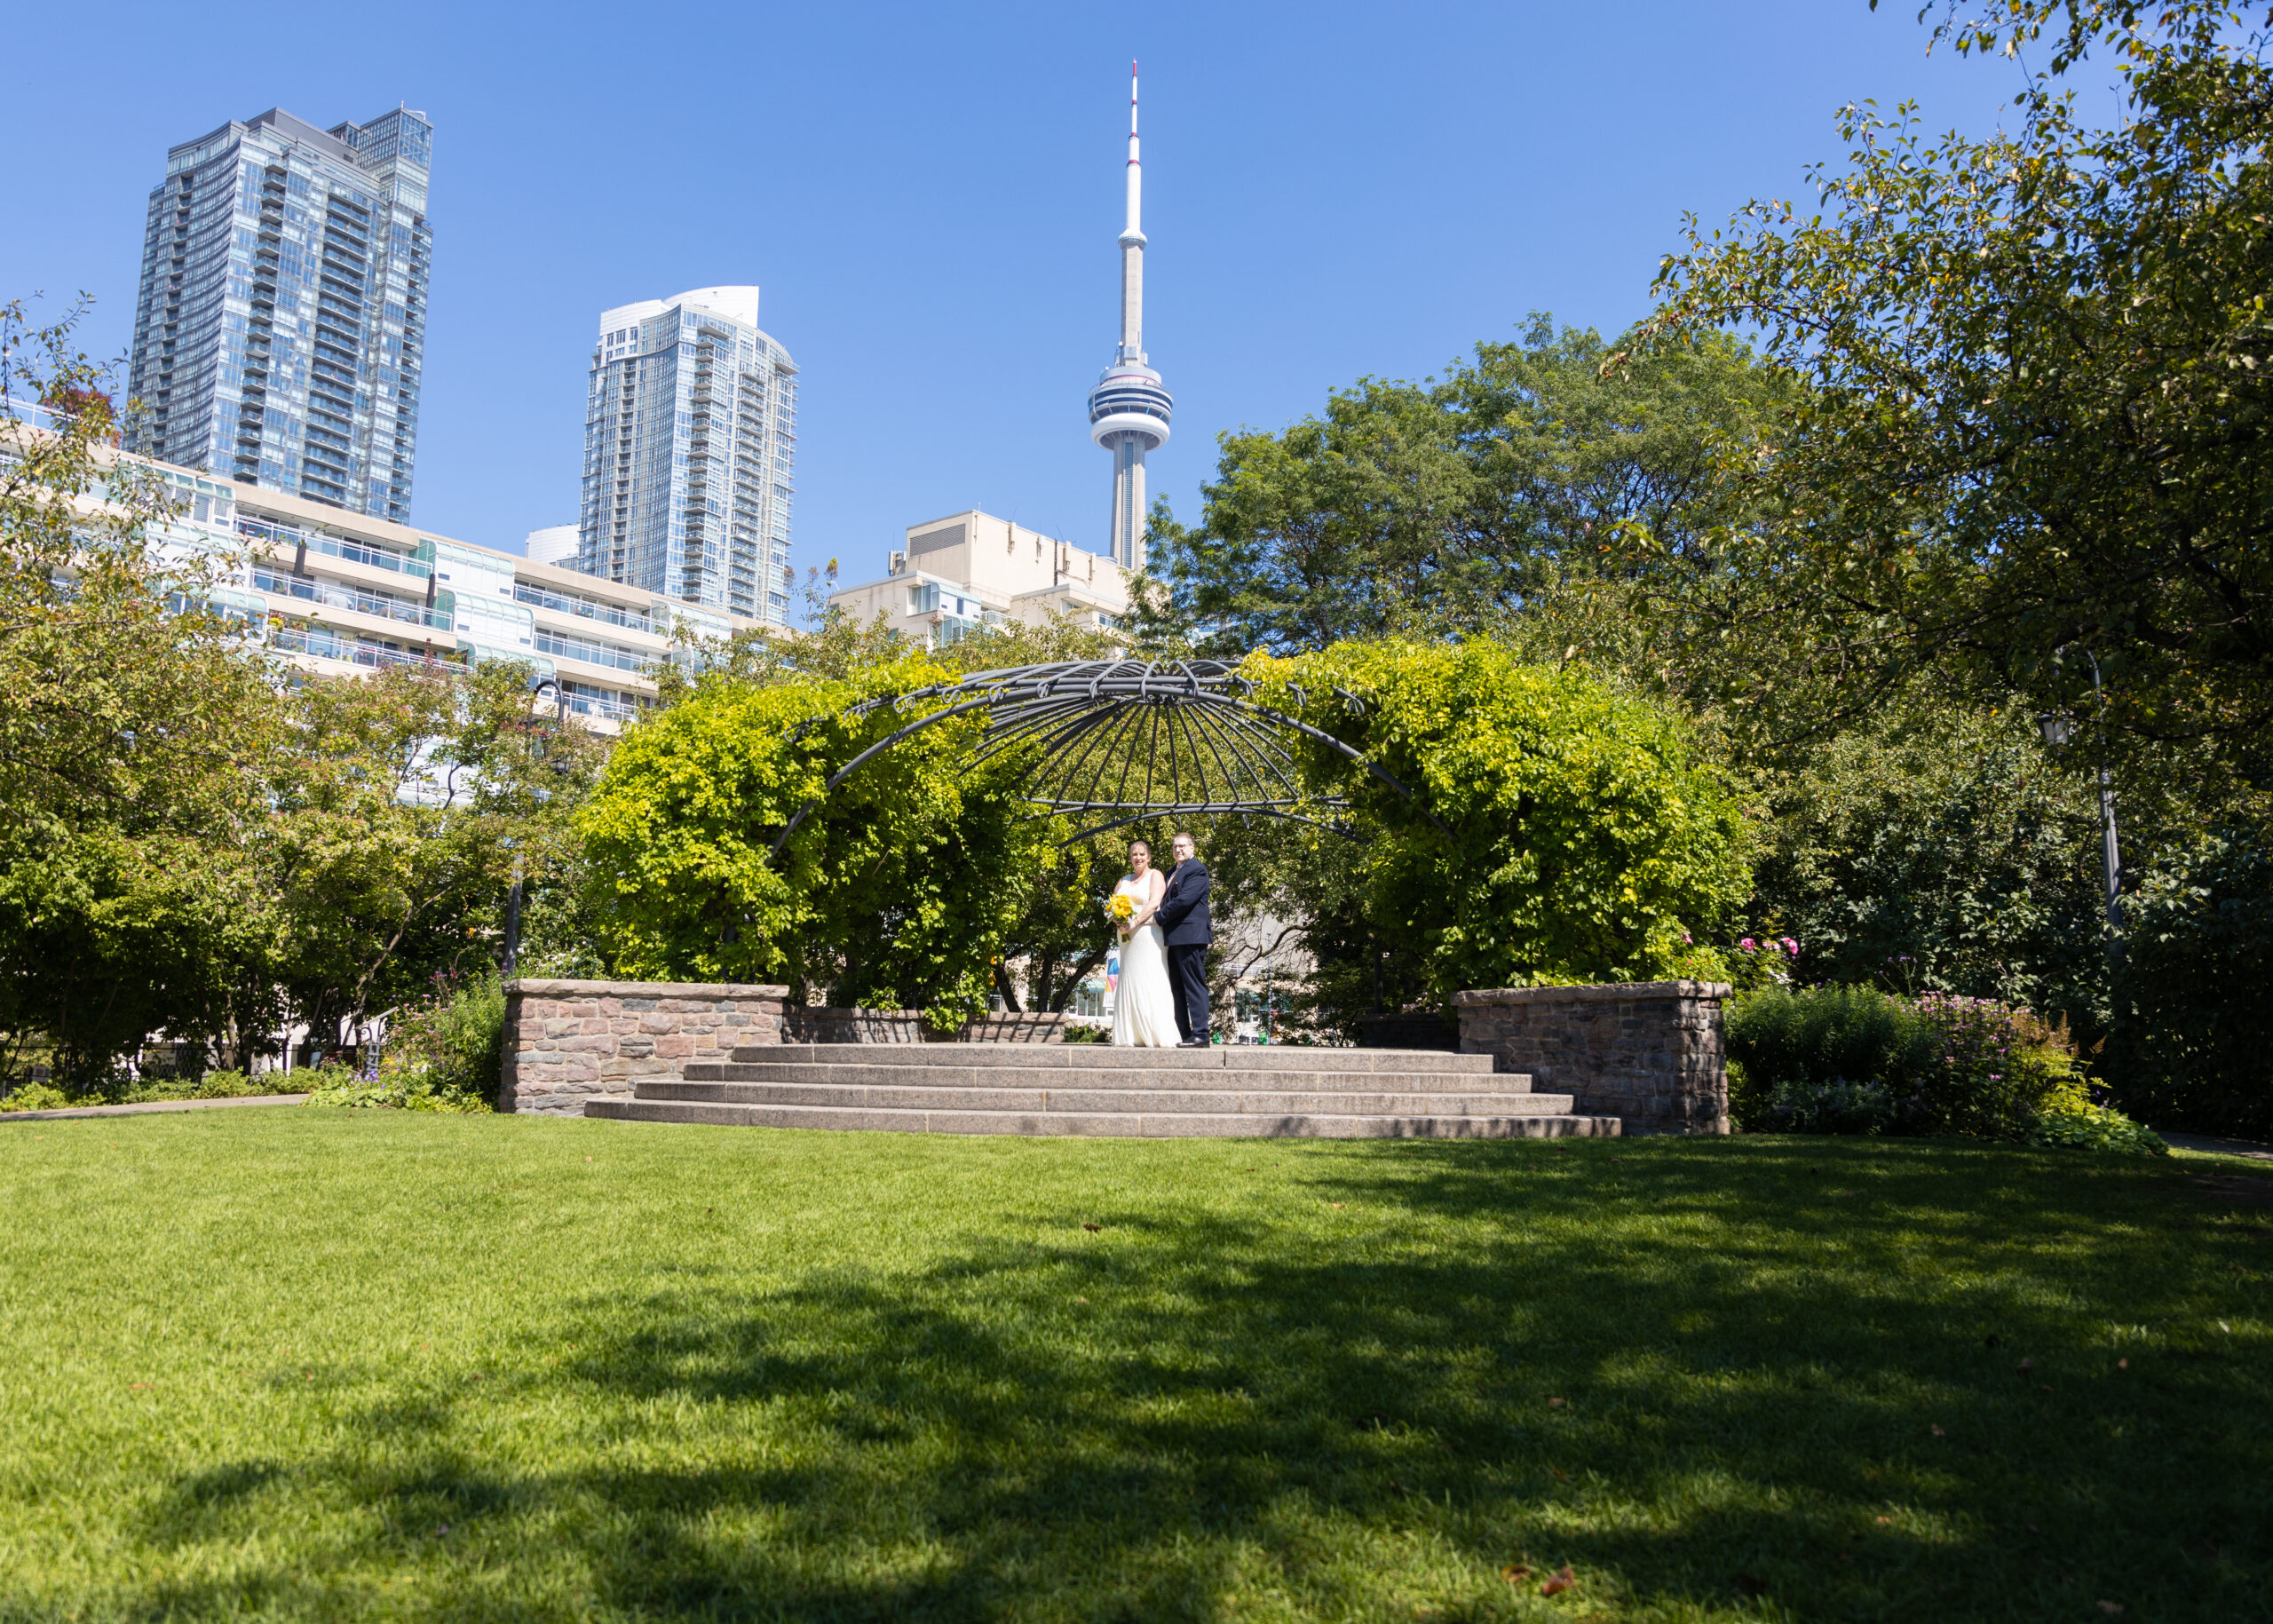 Wedding Photos Toronto. Wide angle CN Tower image.